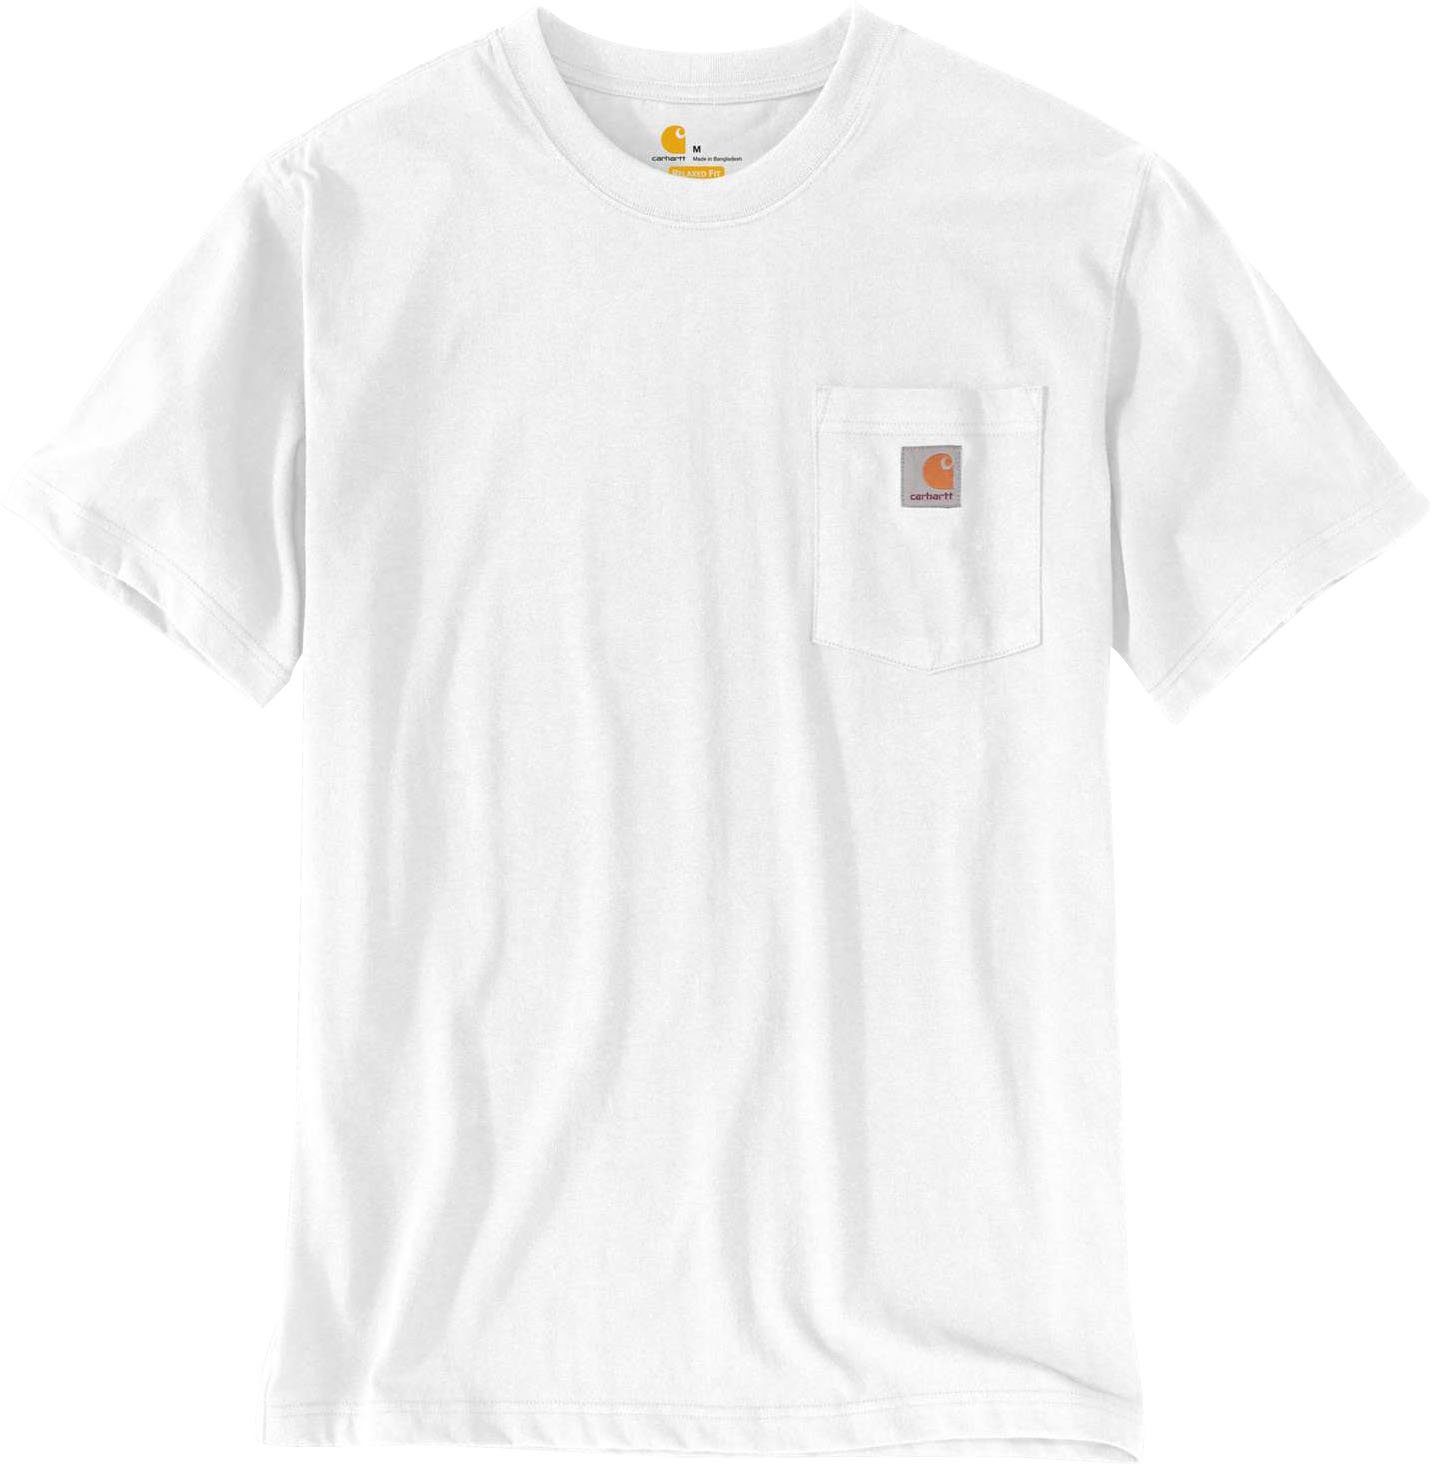 2er hellbraun weiß Carhartt (2-tlg., Set) und T-Shirt